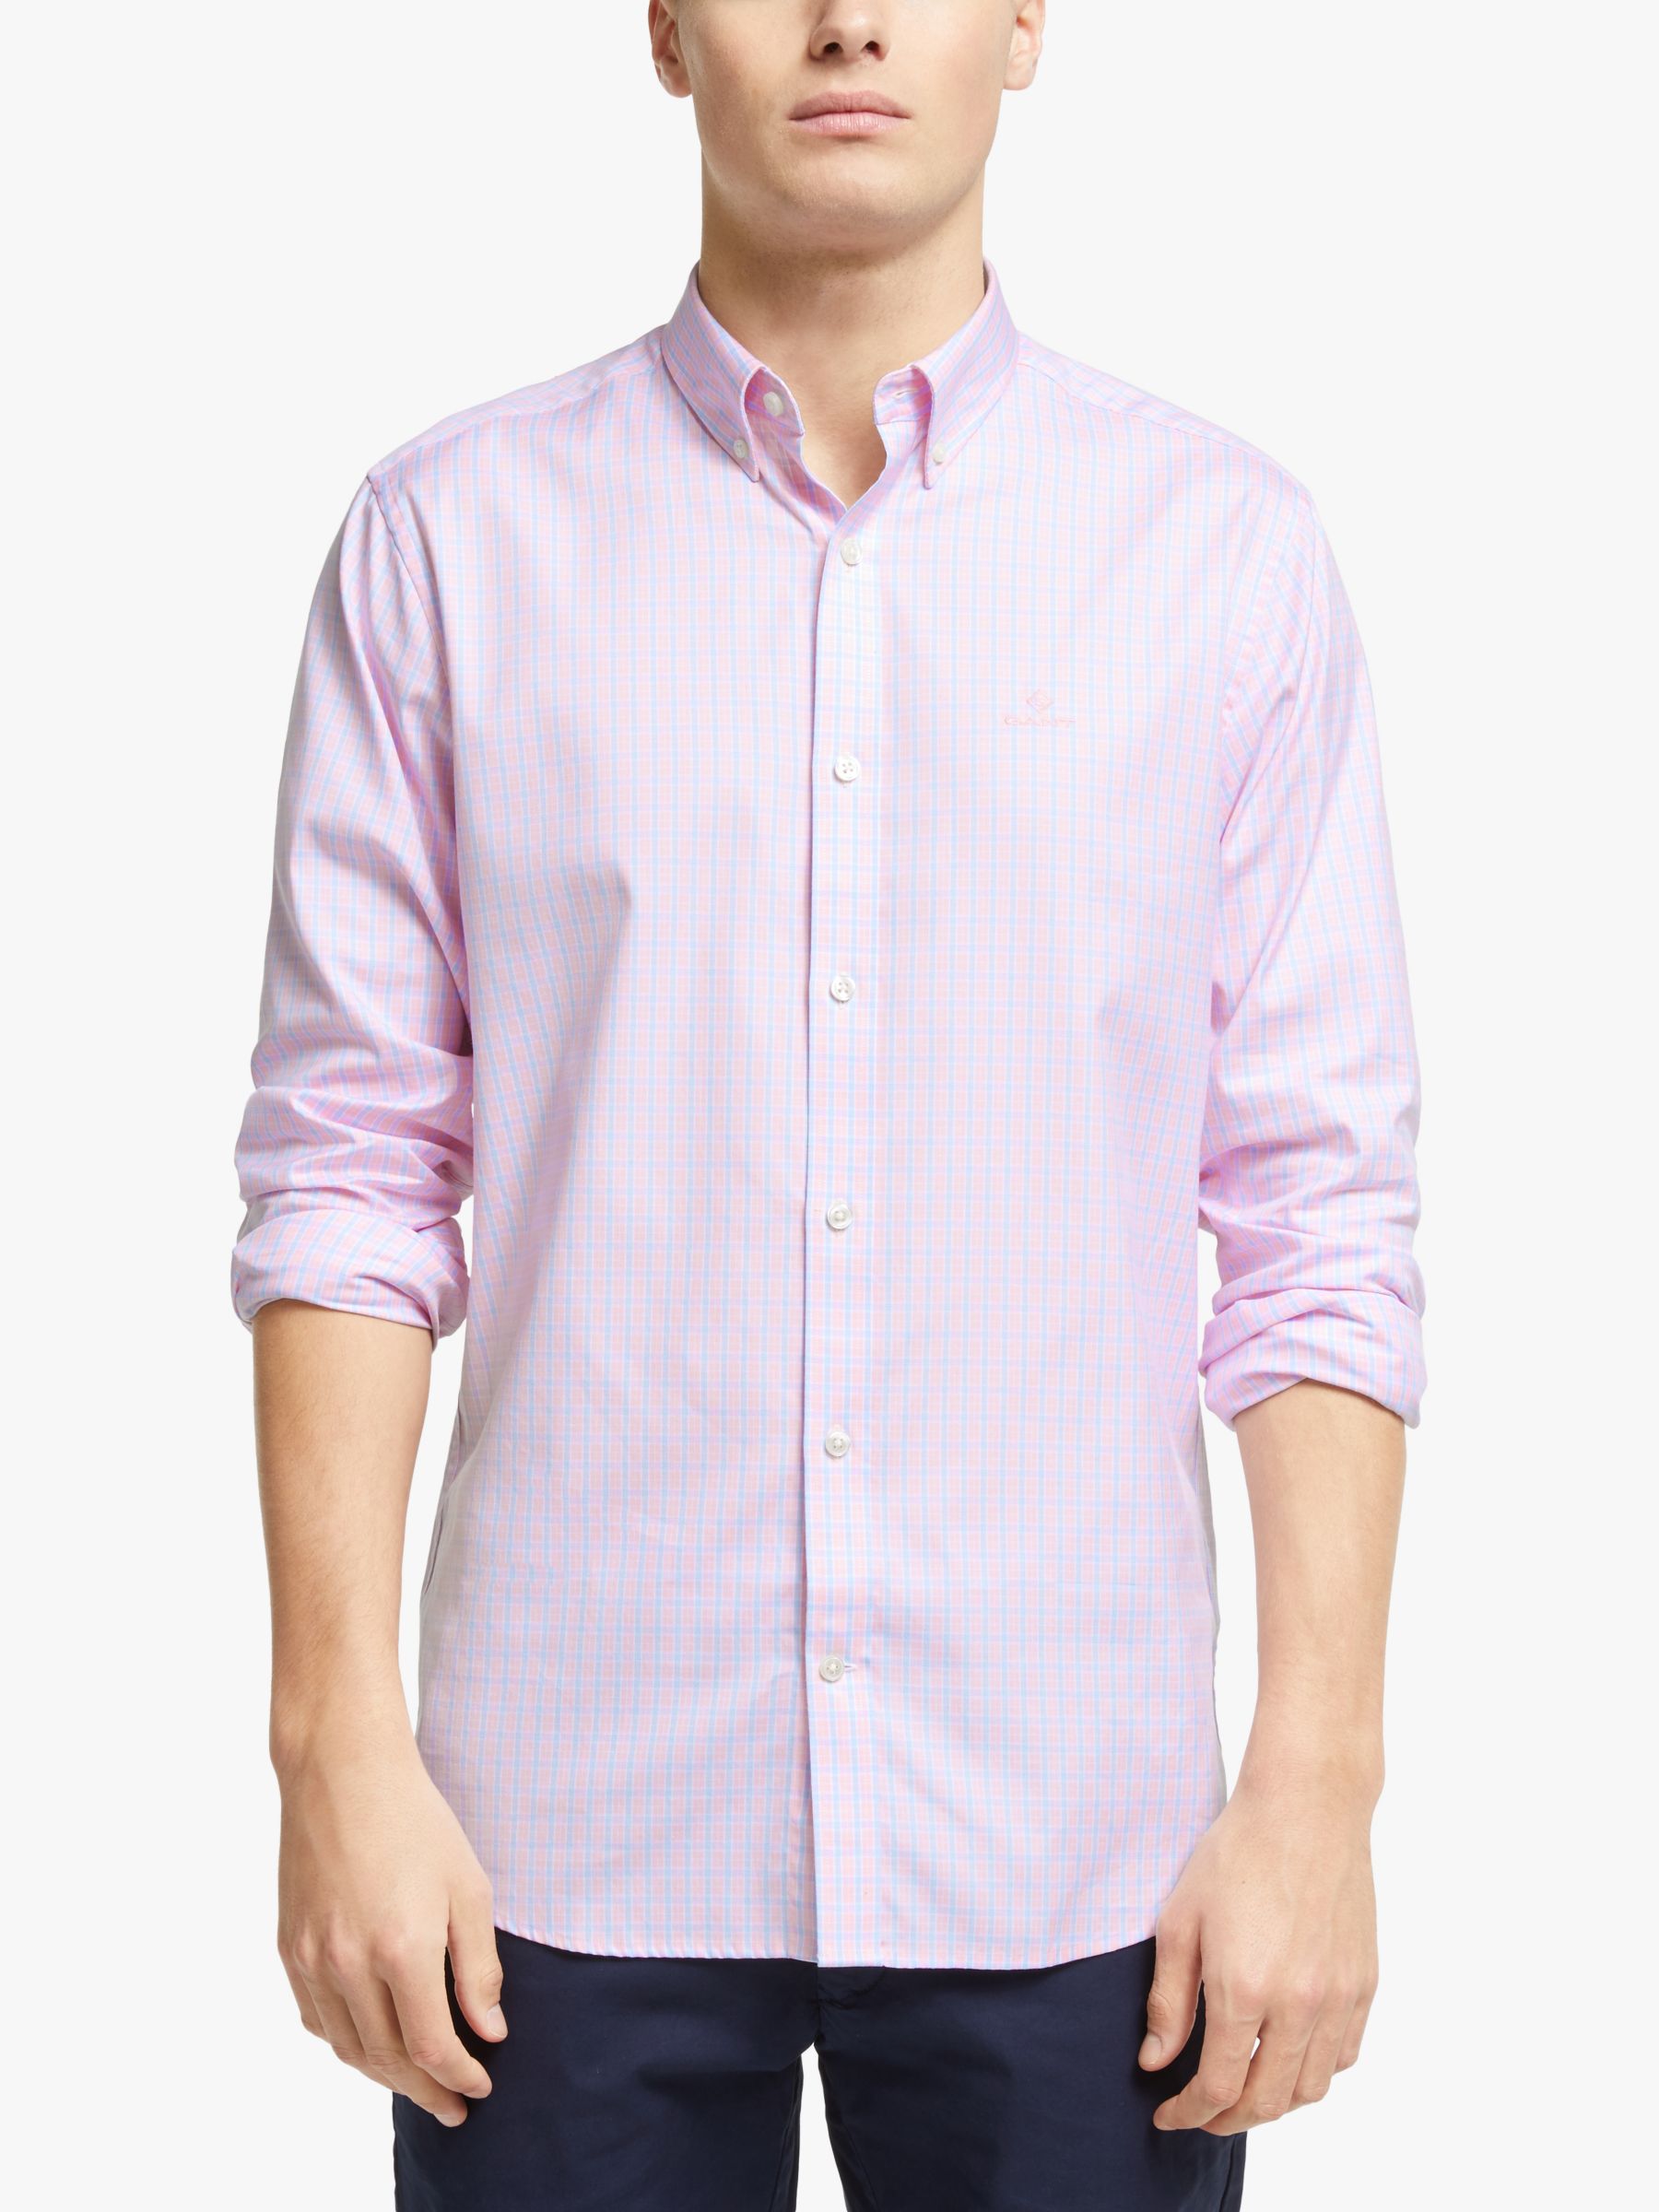 GANT Cotton Oxford Check Shirt, Pink at John Lewis & Partners